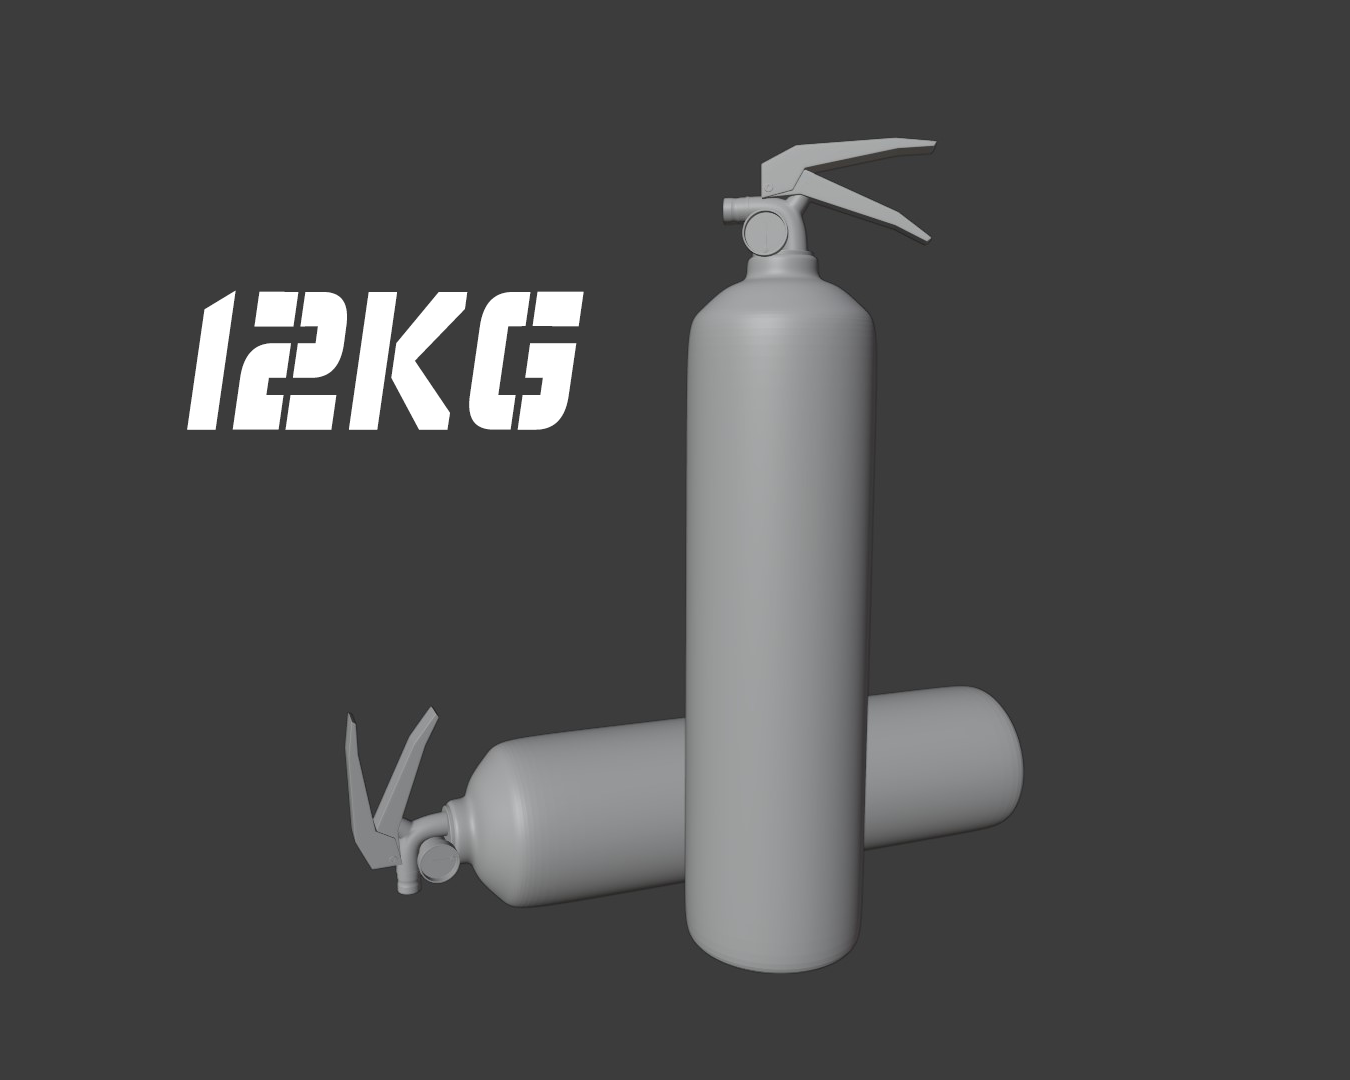 Fire extinguisher 12kg (4pc)